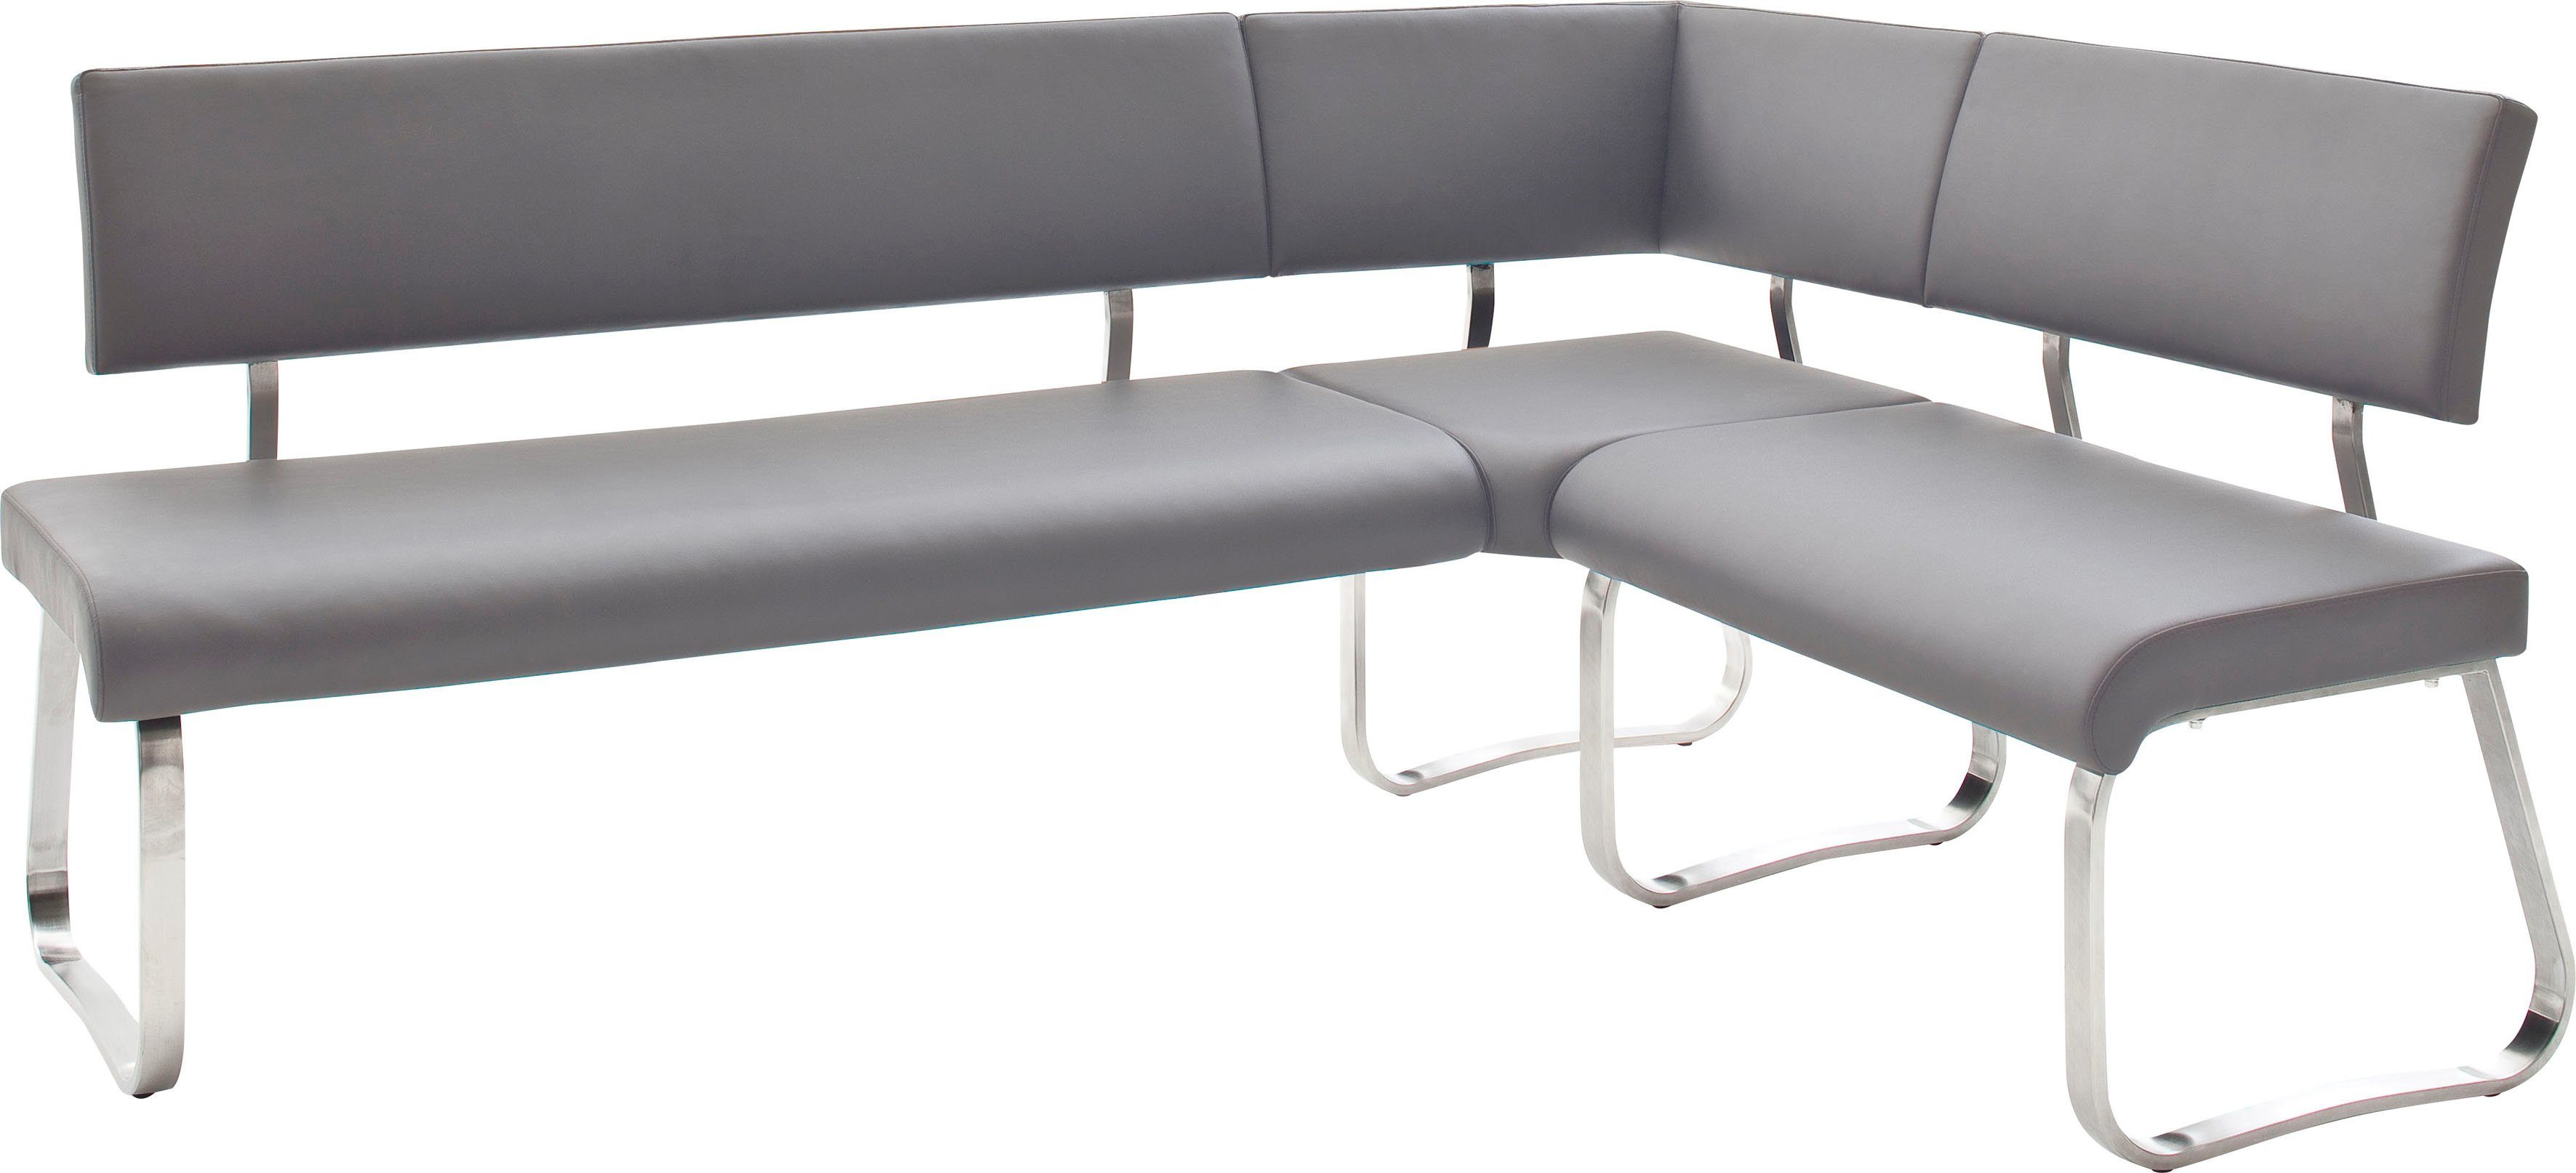 MCA furniture Eckbank Arco, Eckbank frei im Raum stellbar, Breite 200 cm, belastbar bis 500 kg Grau